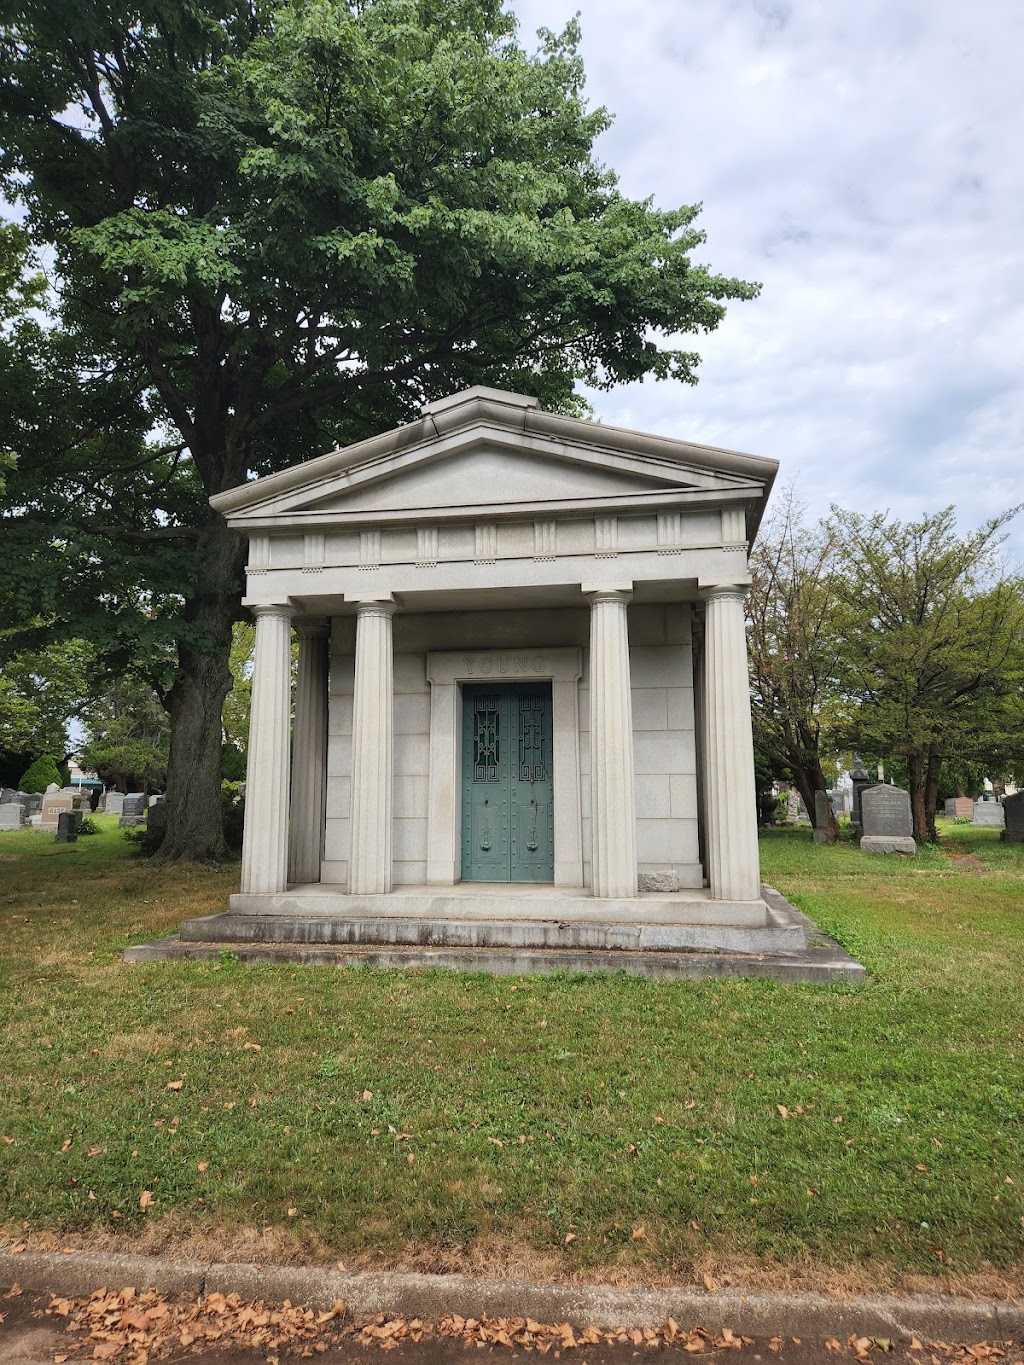 Bay View Cemetery | 321 Garfield Ave, Jersey City, NJ 07305 | Phone: (201) 433-2400